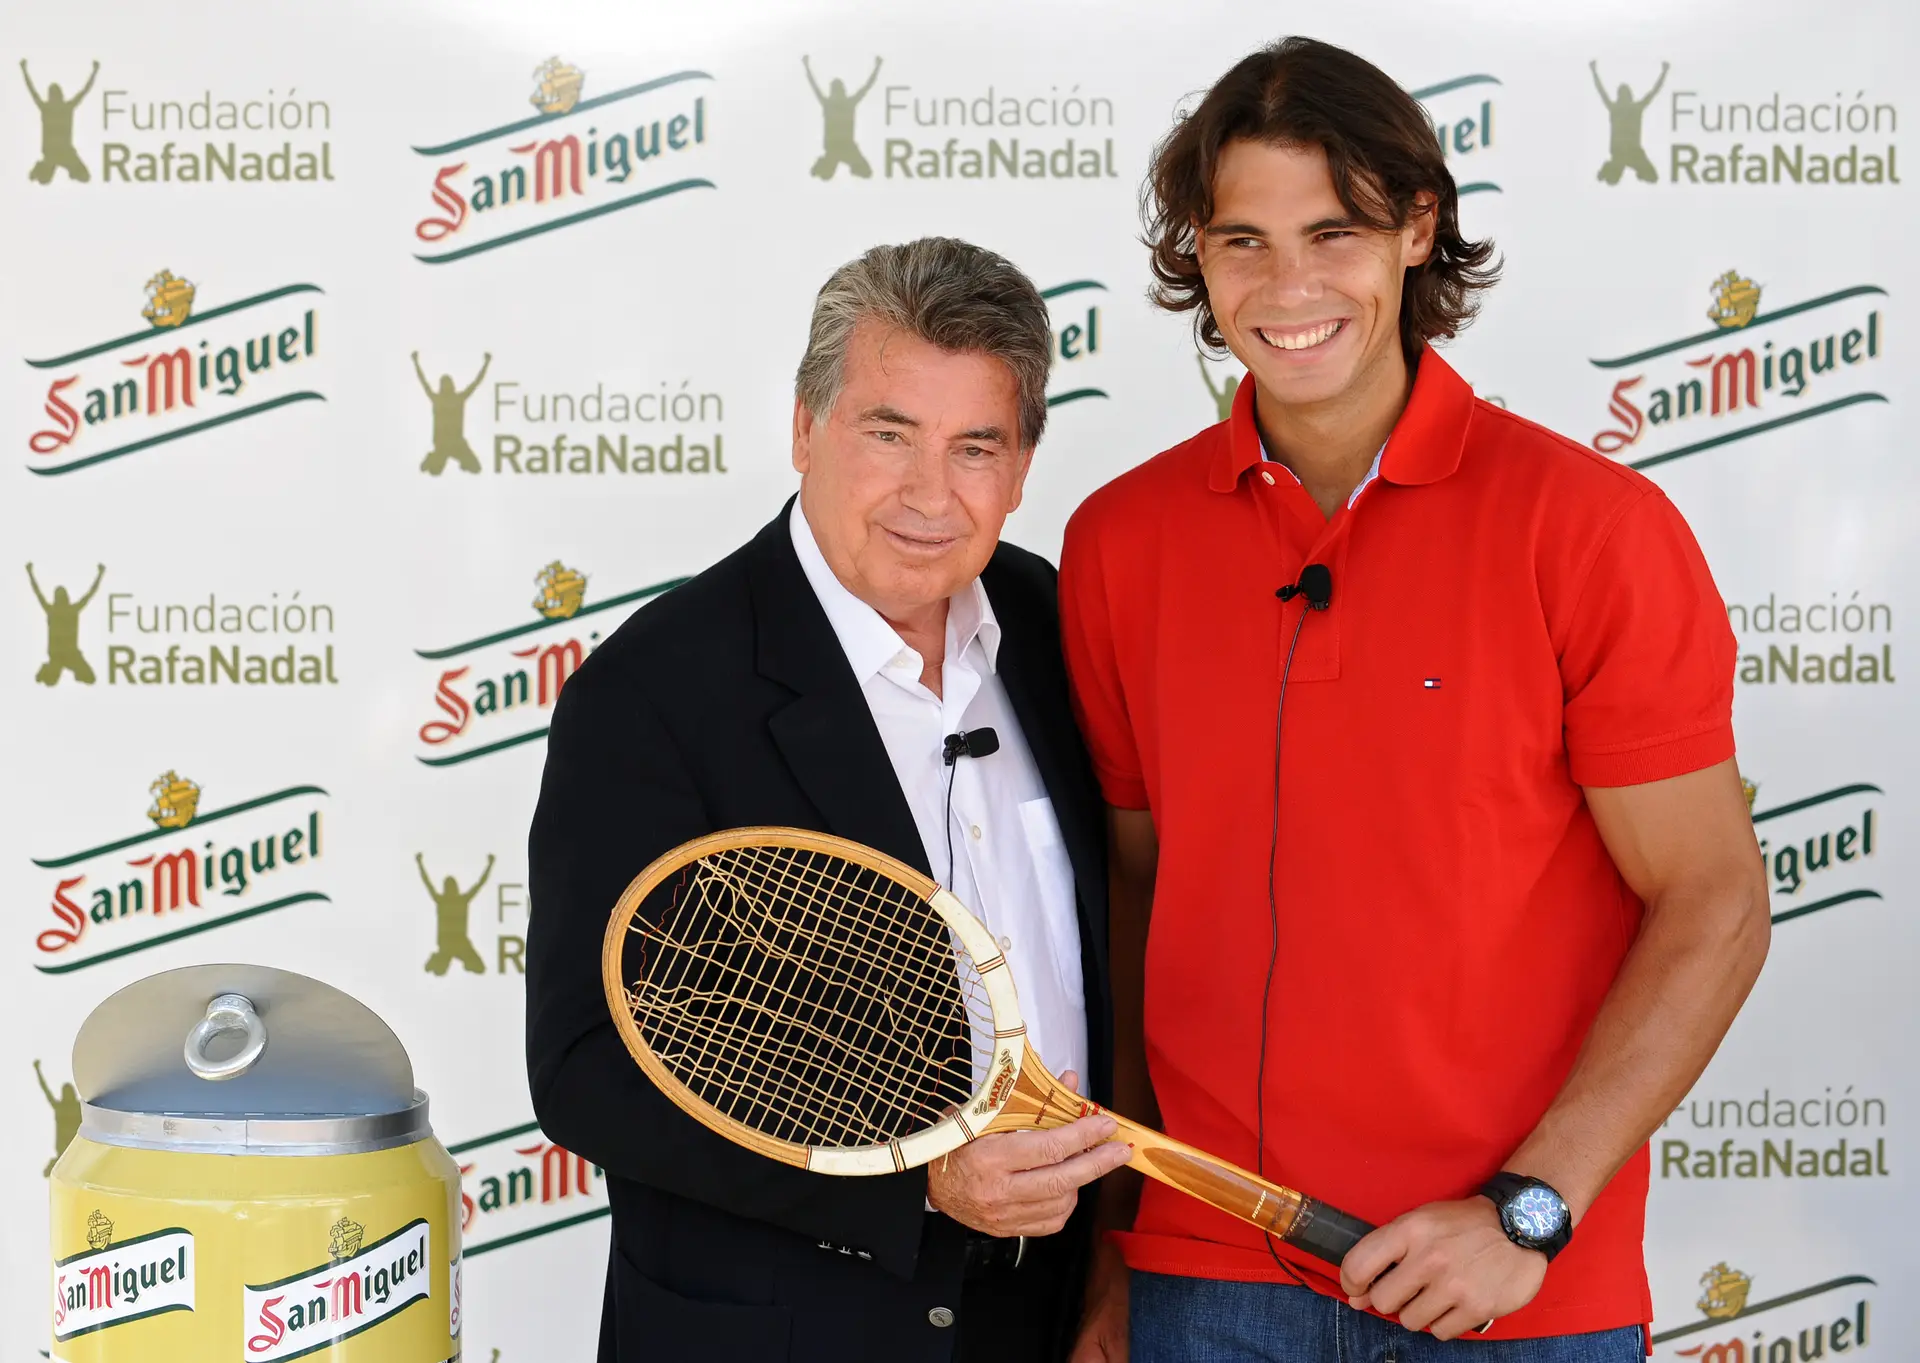 Presidente do Comitê Olímpico Espanhol afirma que Rafael Nadal